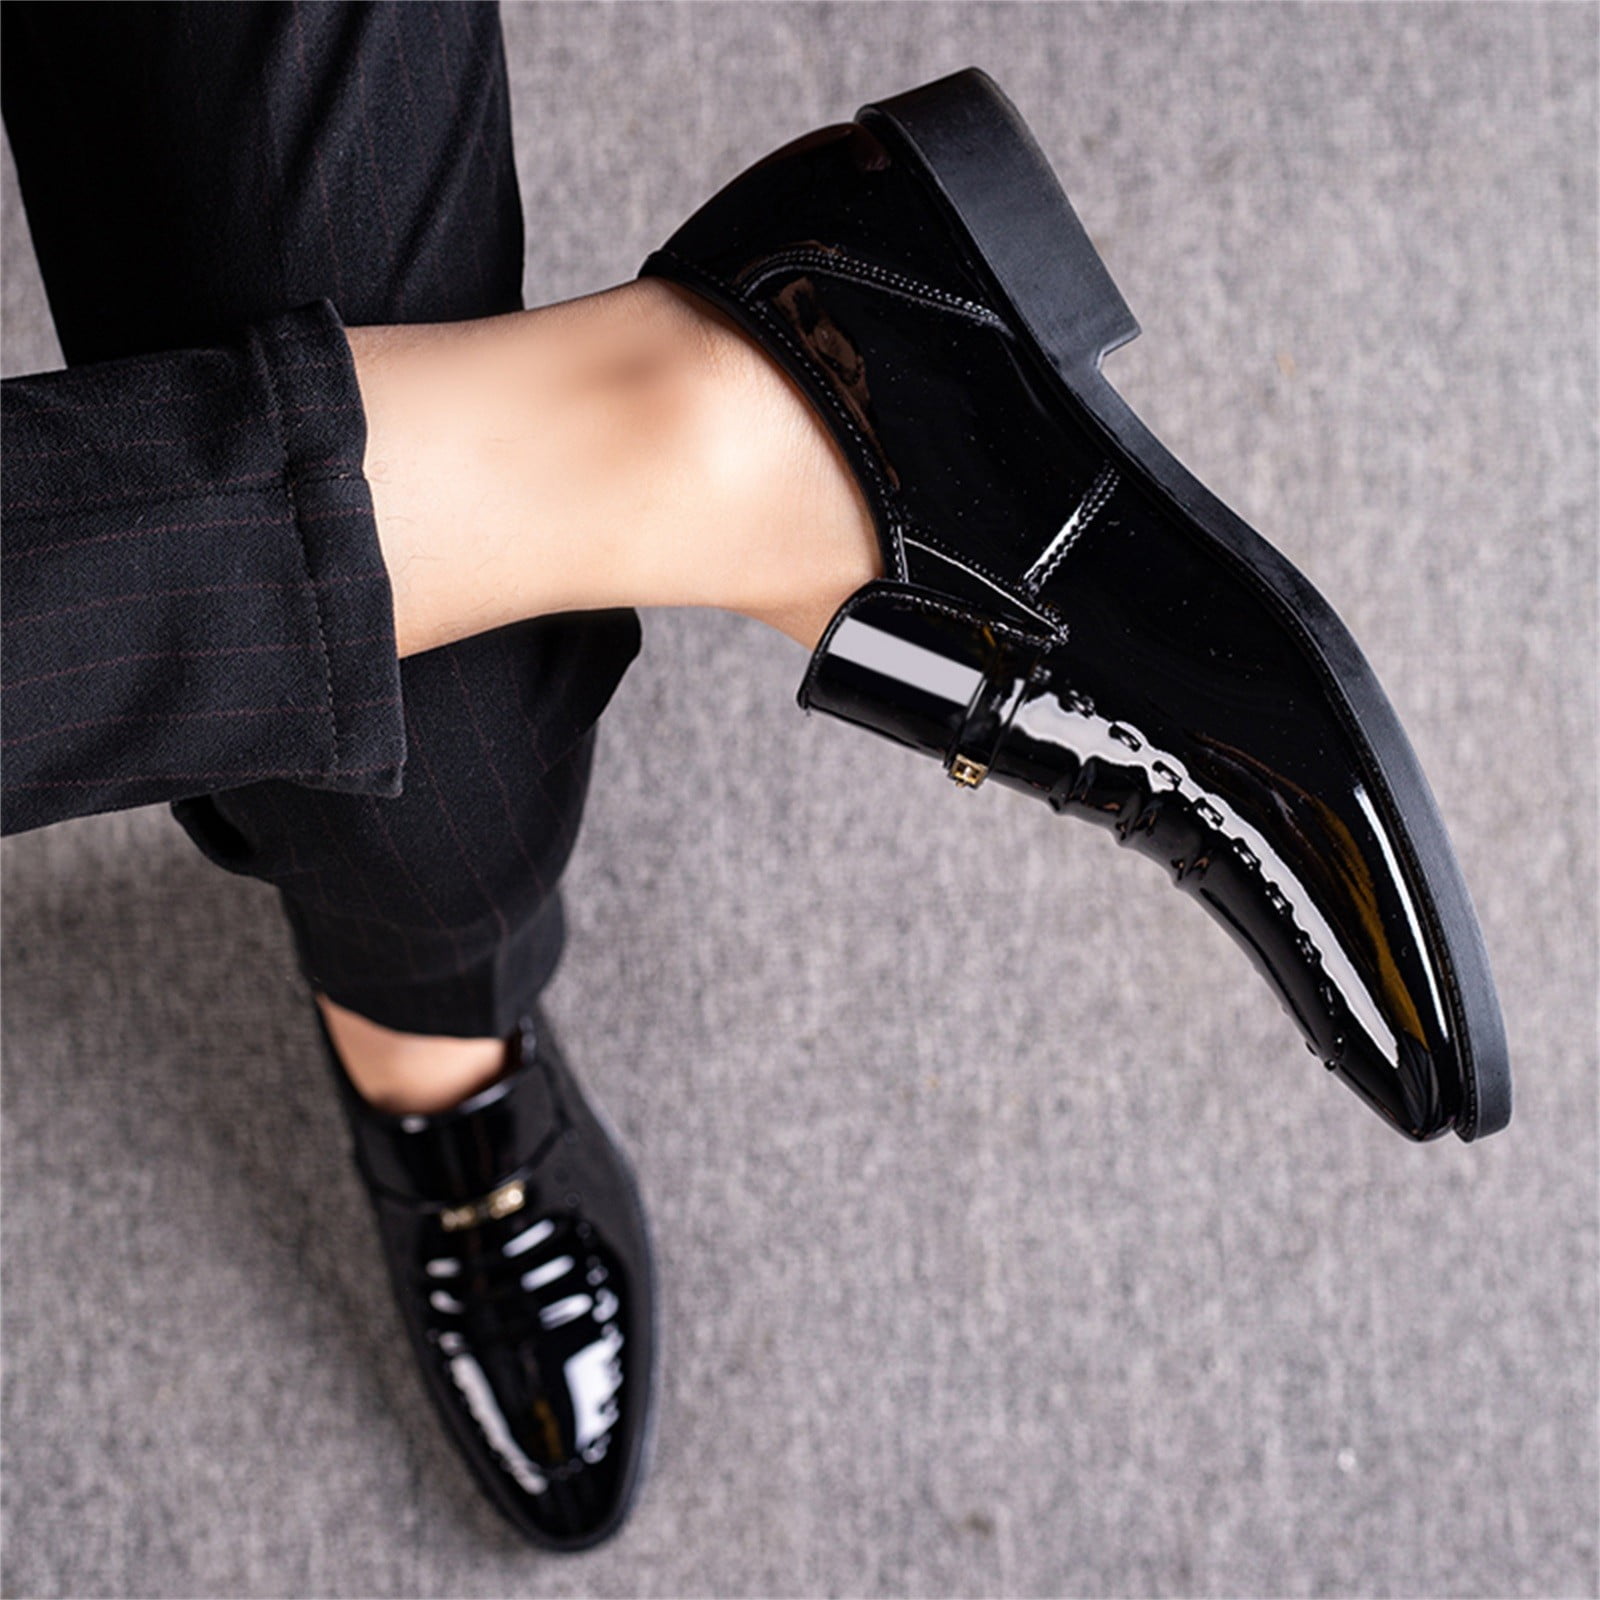 Buy Attitudist Matte Black High Heel Formal Derby Shoes for Men at Amazon.in